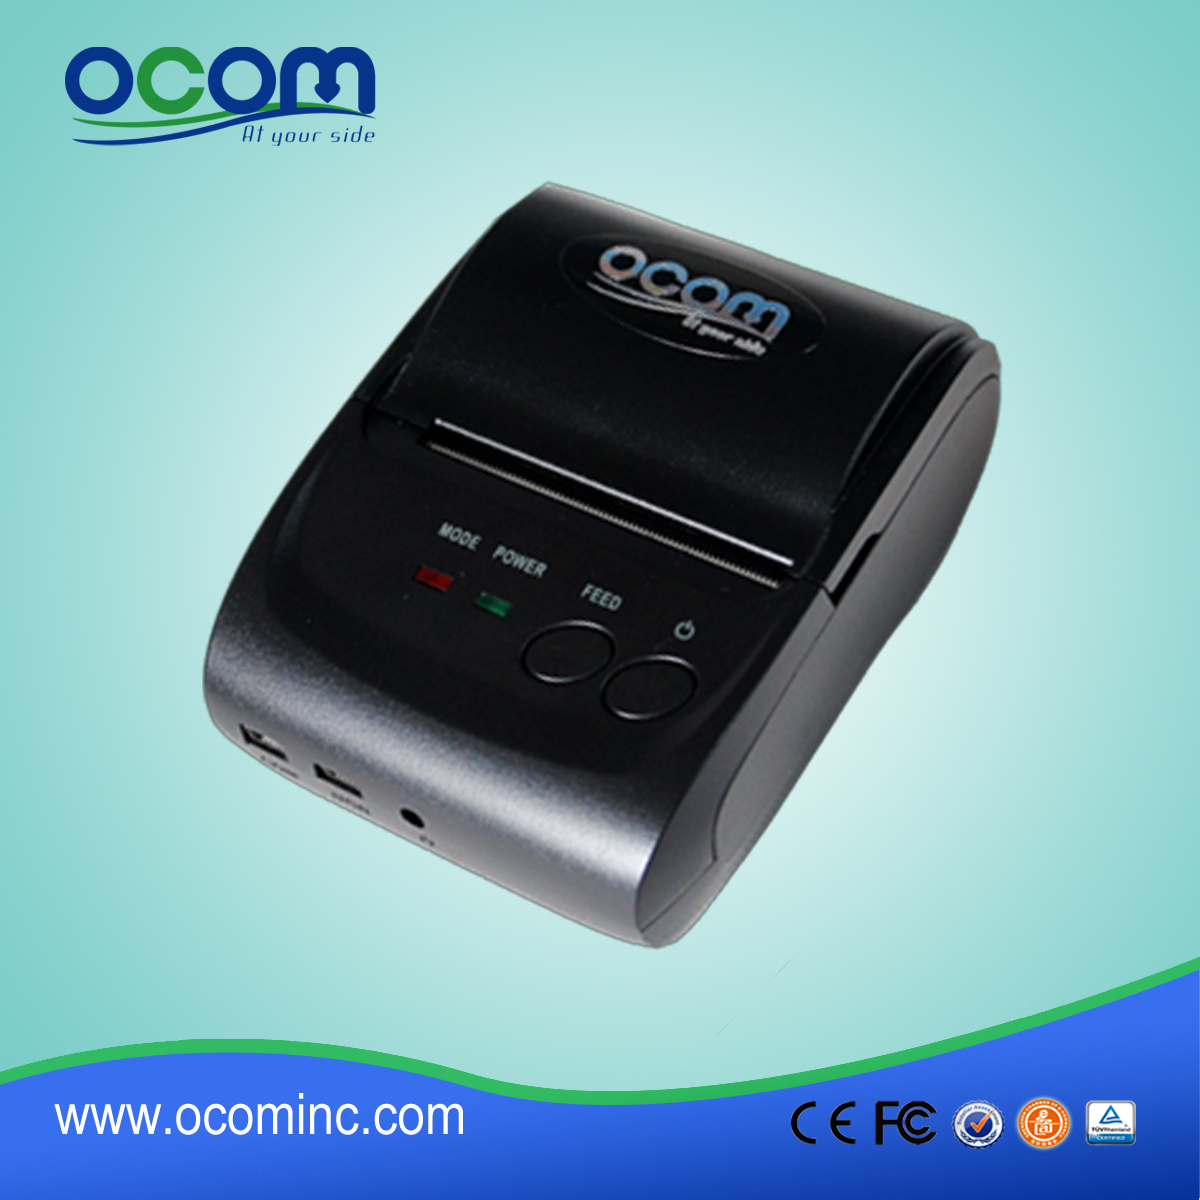 OCPP-M05: μίνι φορητό εκτυπωτή Bluetooth, Pos θερμικό εκτυπωτή